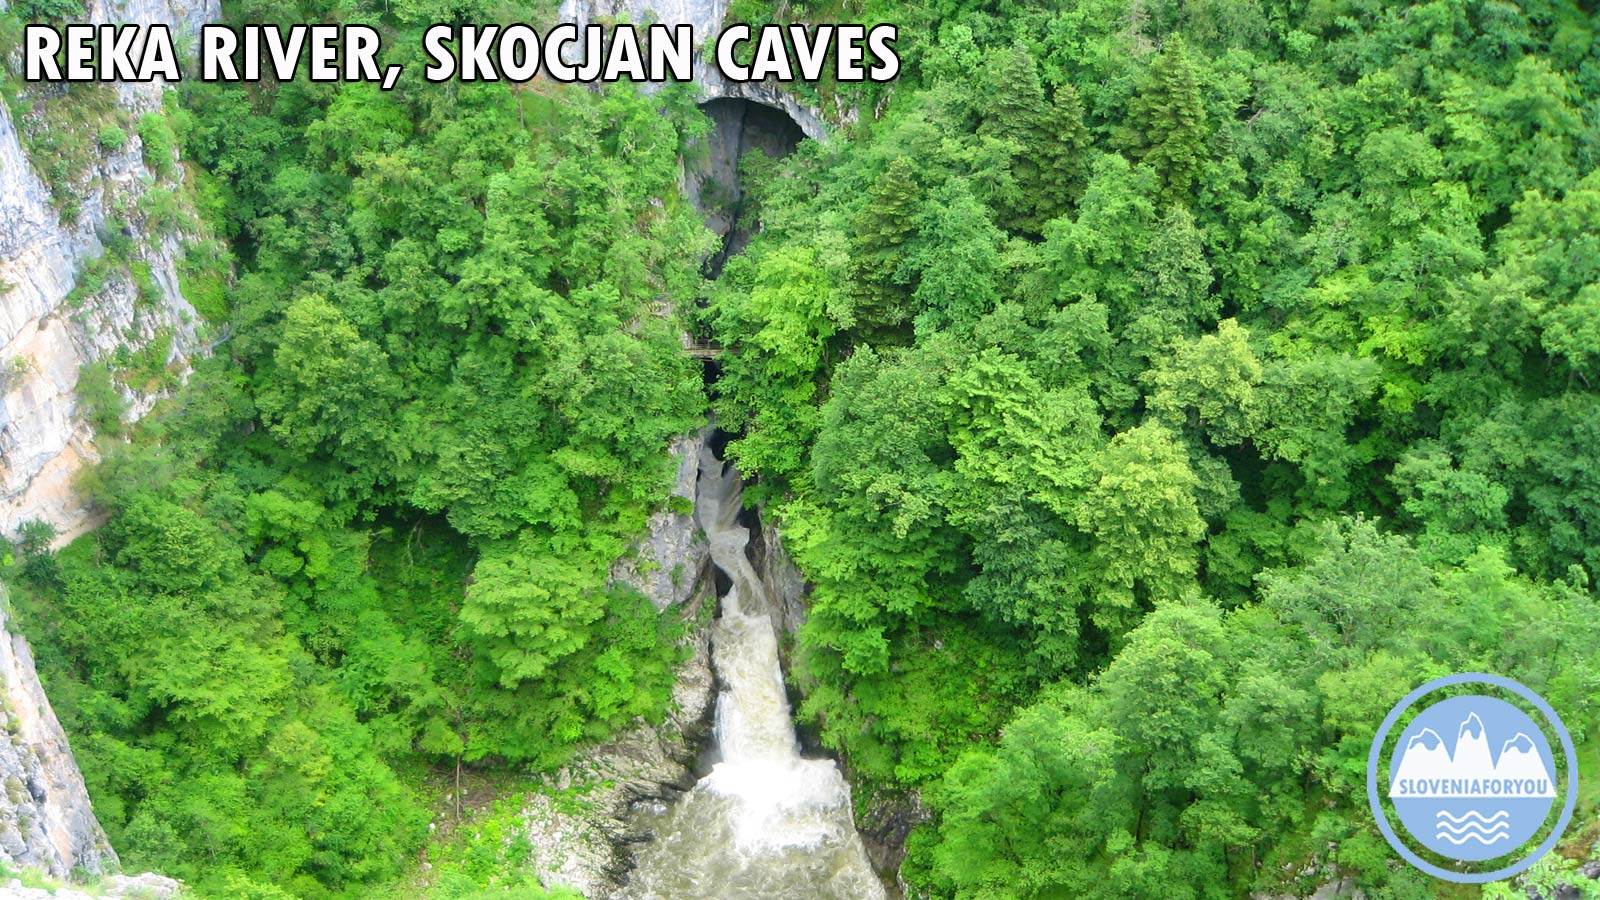 The Reka Canyon at Škocjan Caves, Sloveniaforyou